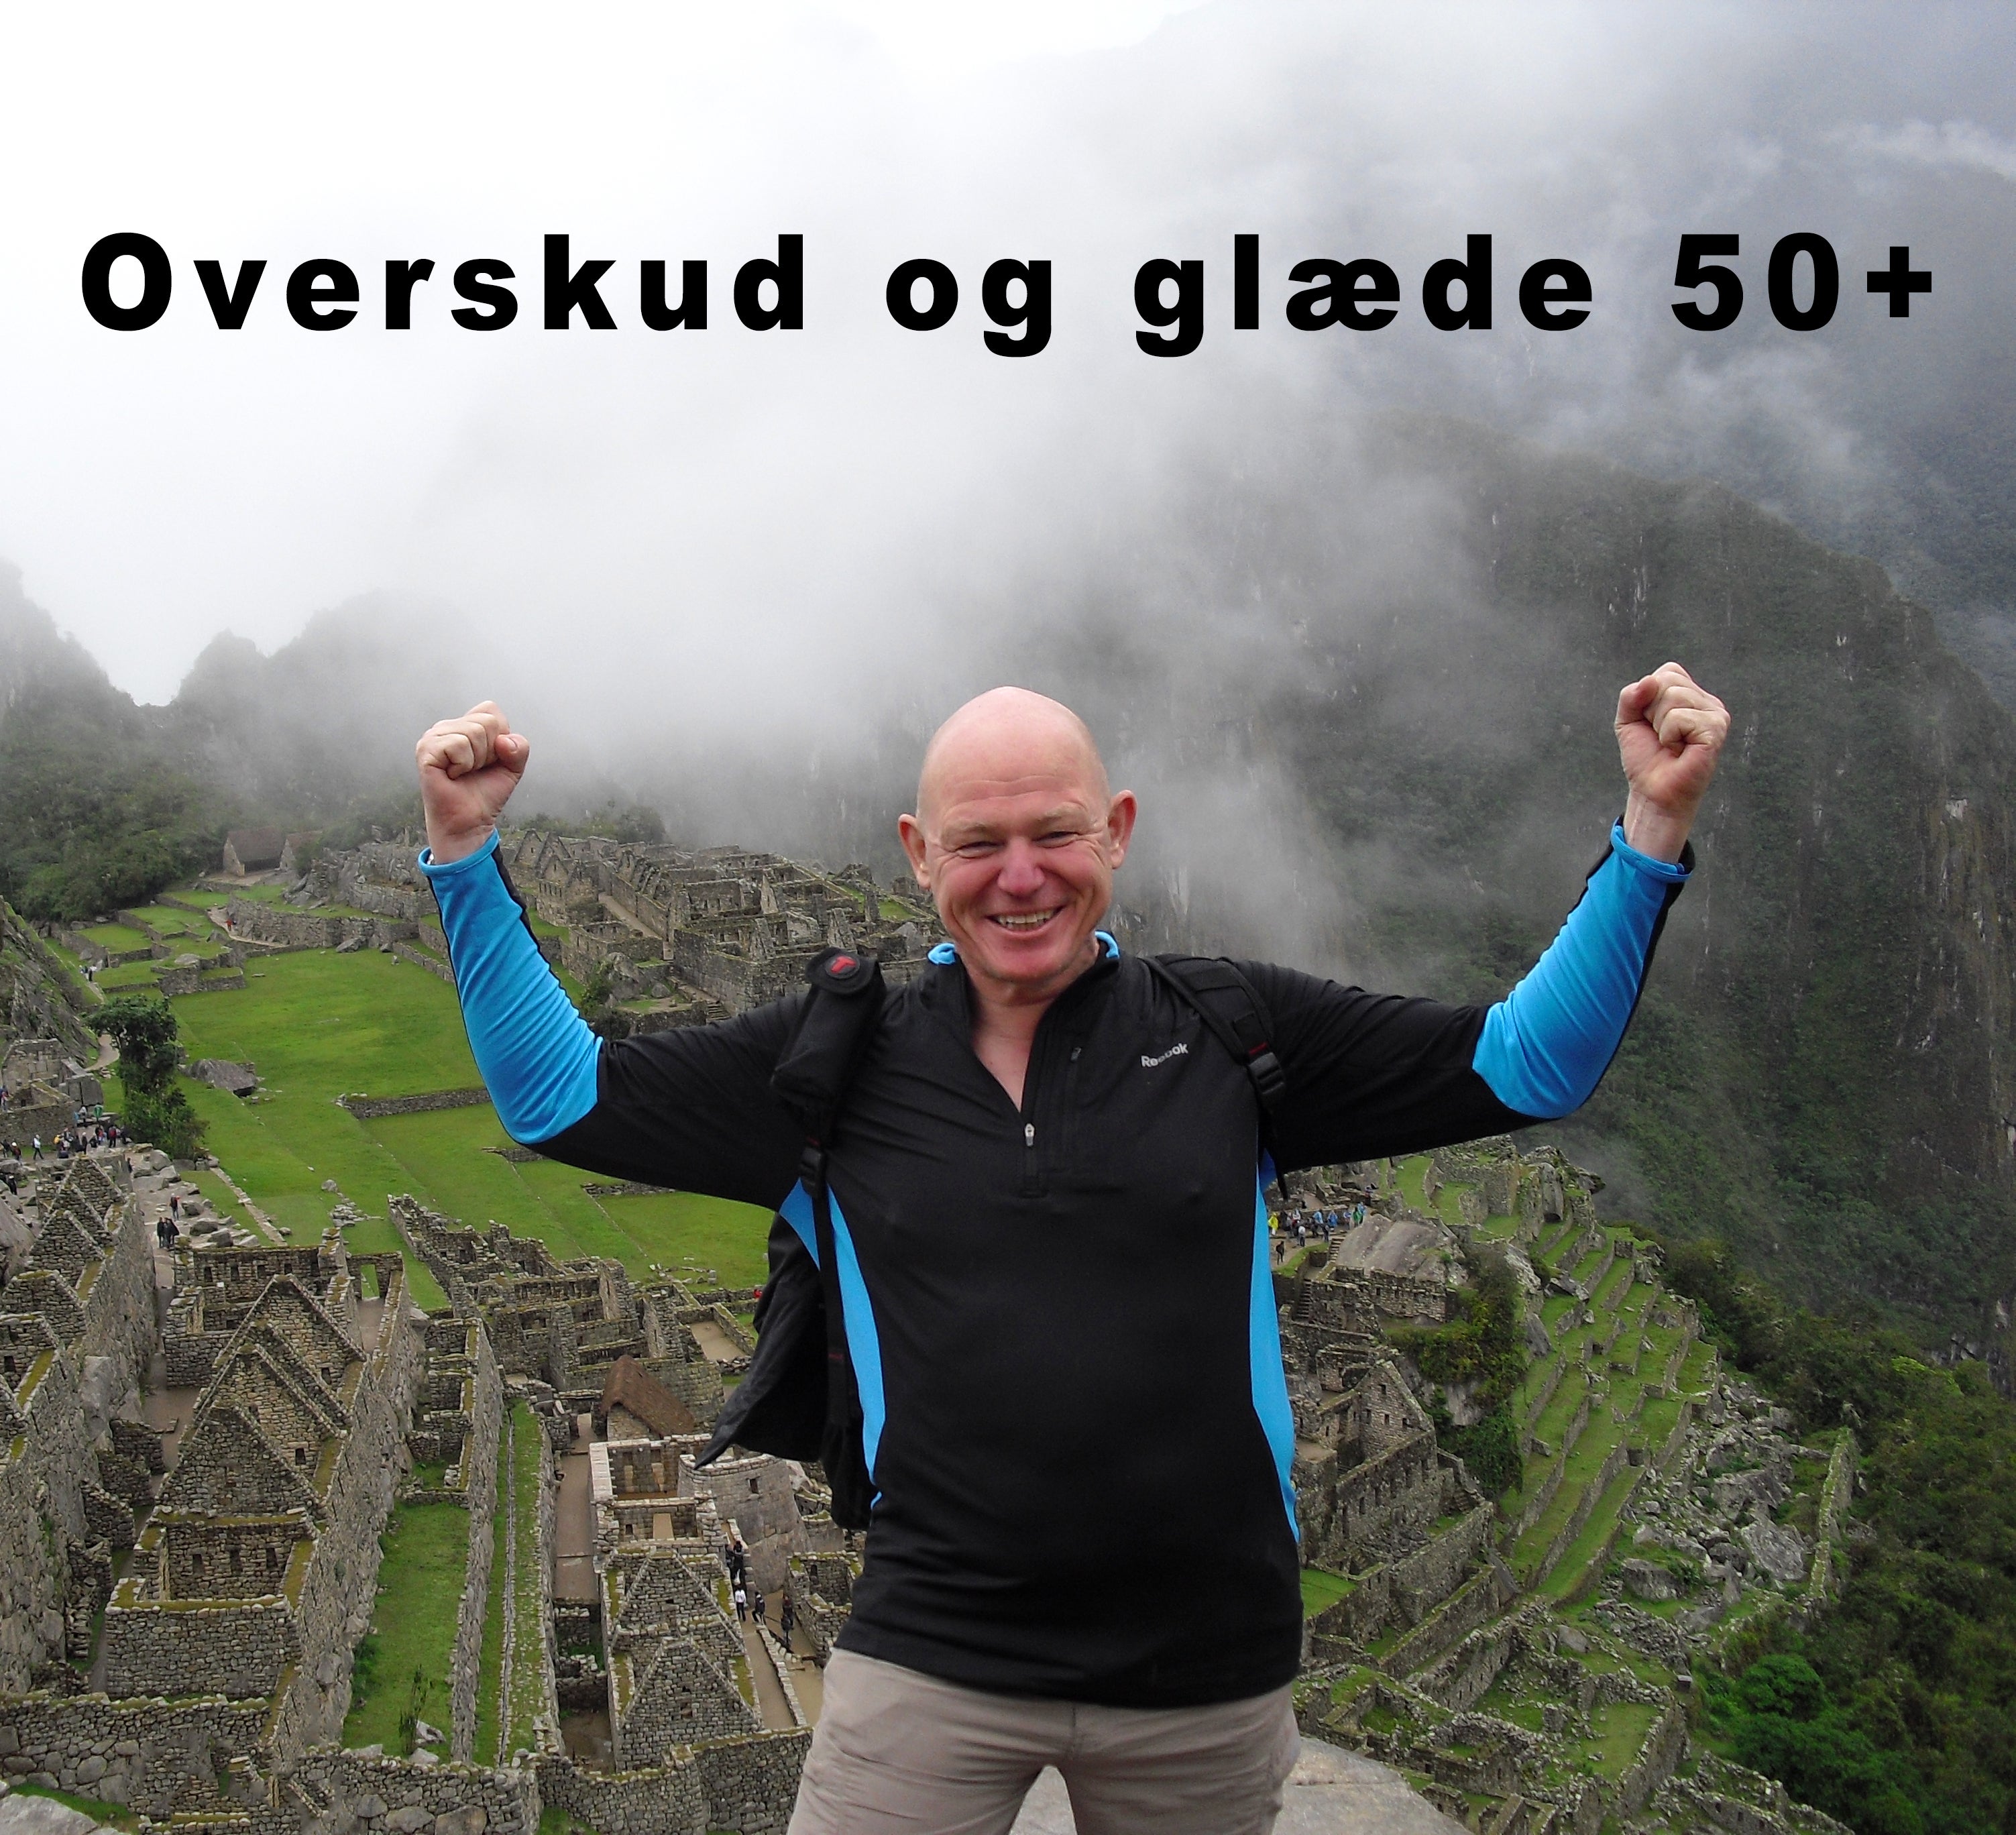 Foredrag med Carsten Sommerskov - Overskud og glæde 50+